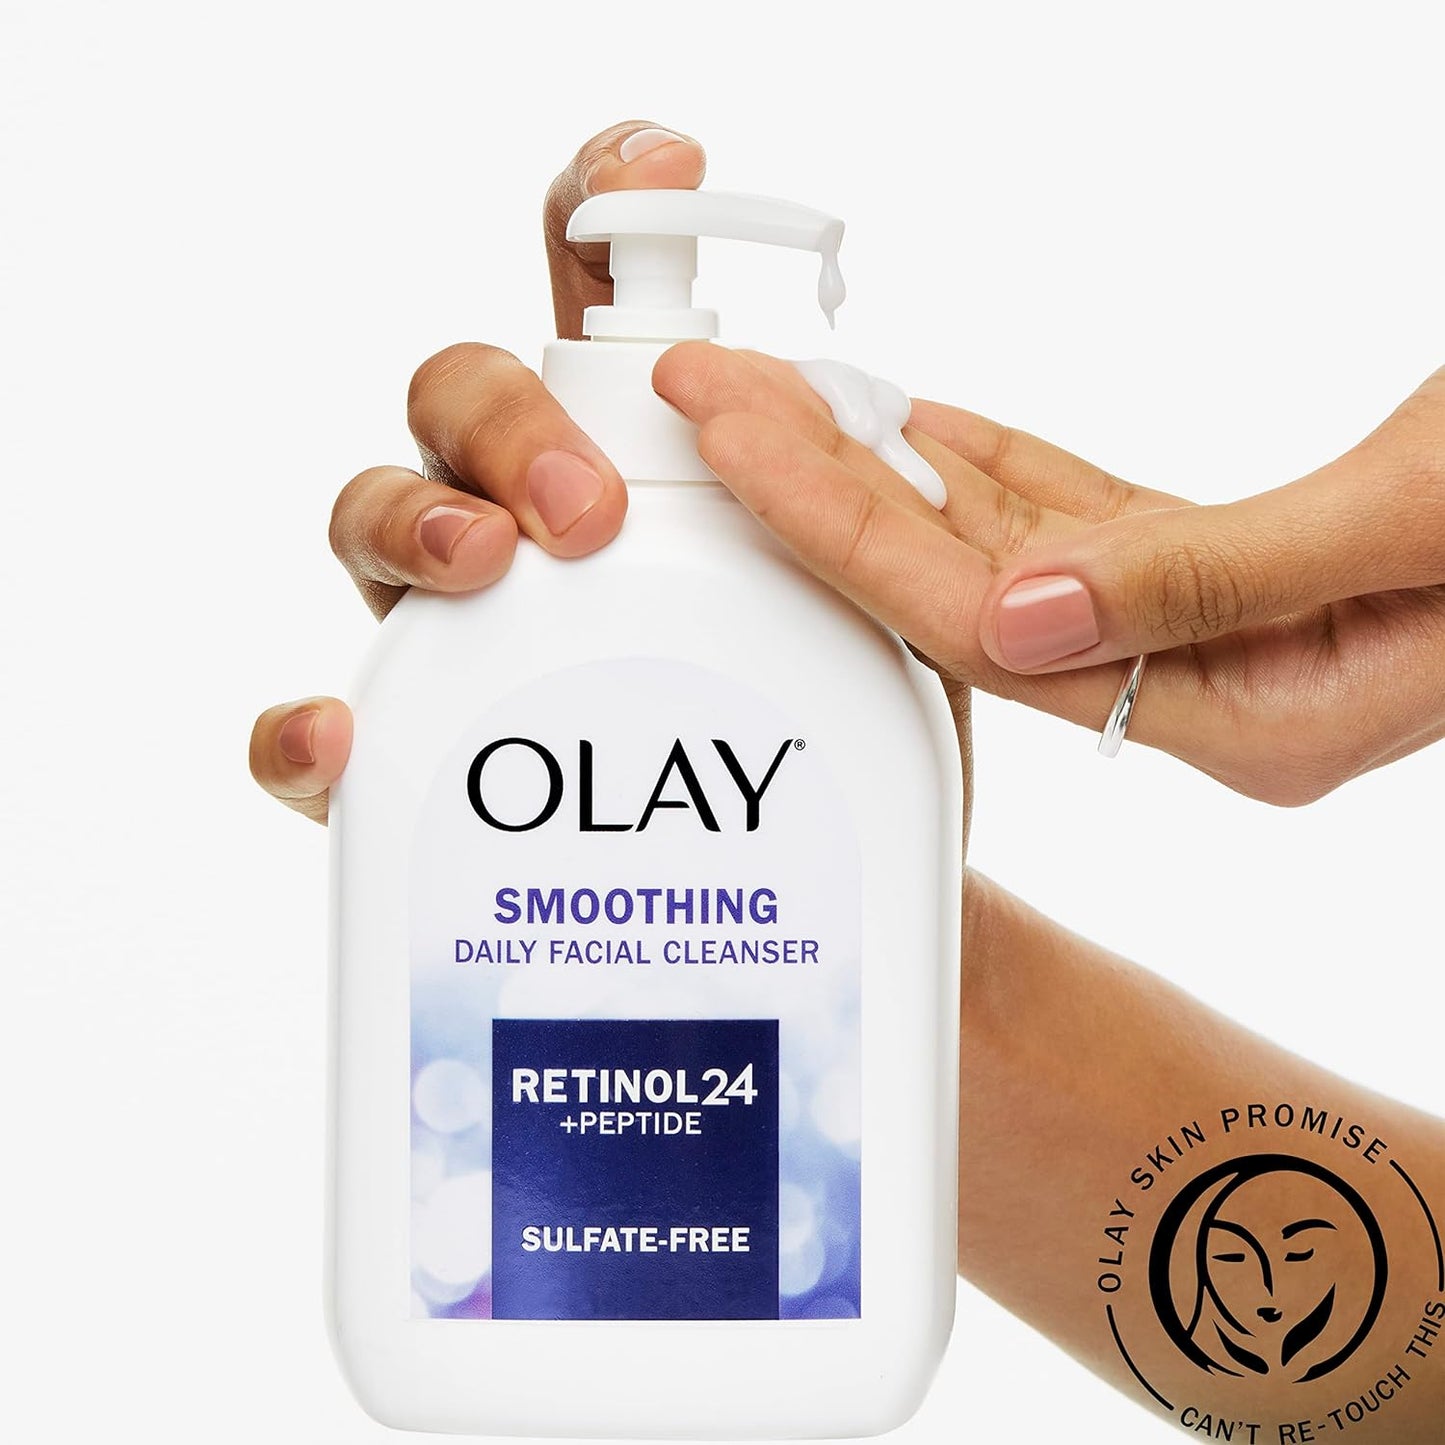 Olay Retinol 24 + Peptide Face Wash, Smoothing, Sulfate-Free, 16 oz